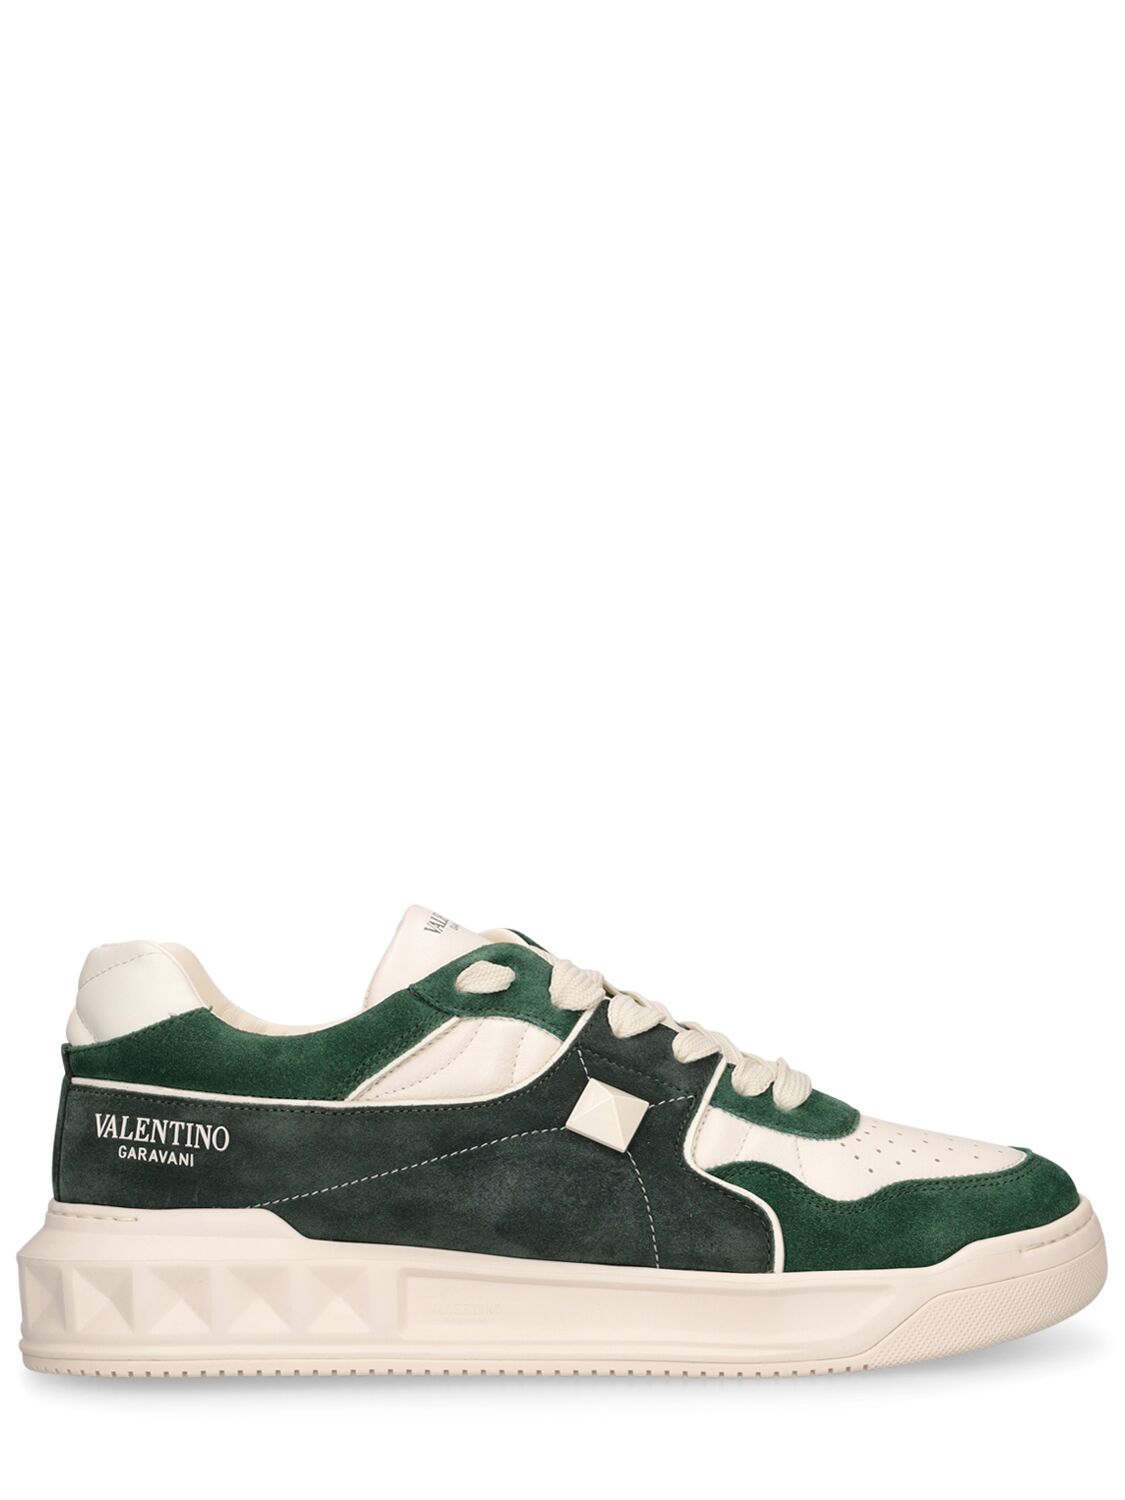 Valentino Garavani One Stud Suede Low Top Sneakers In White,green